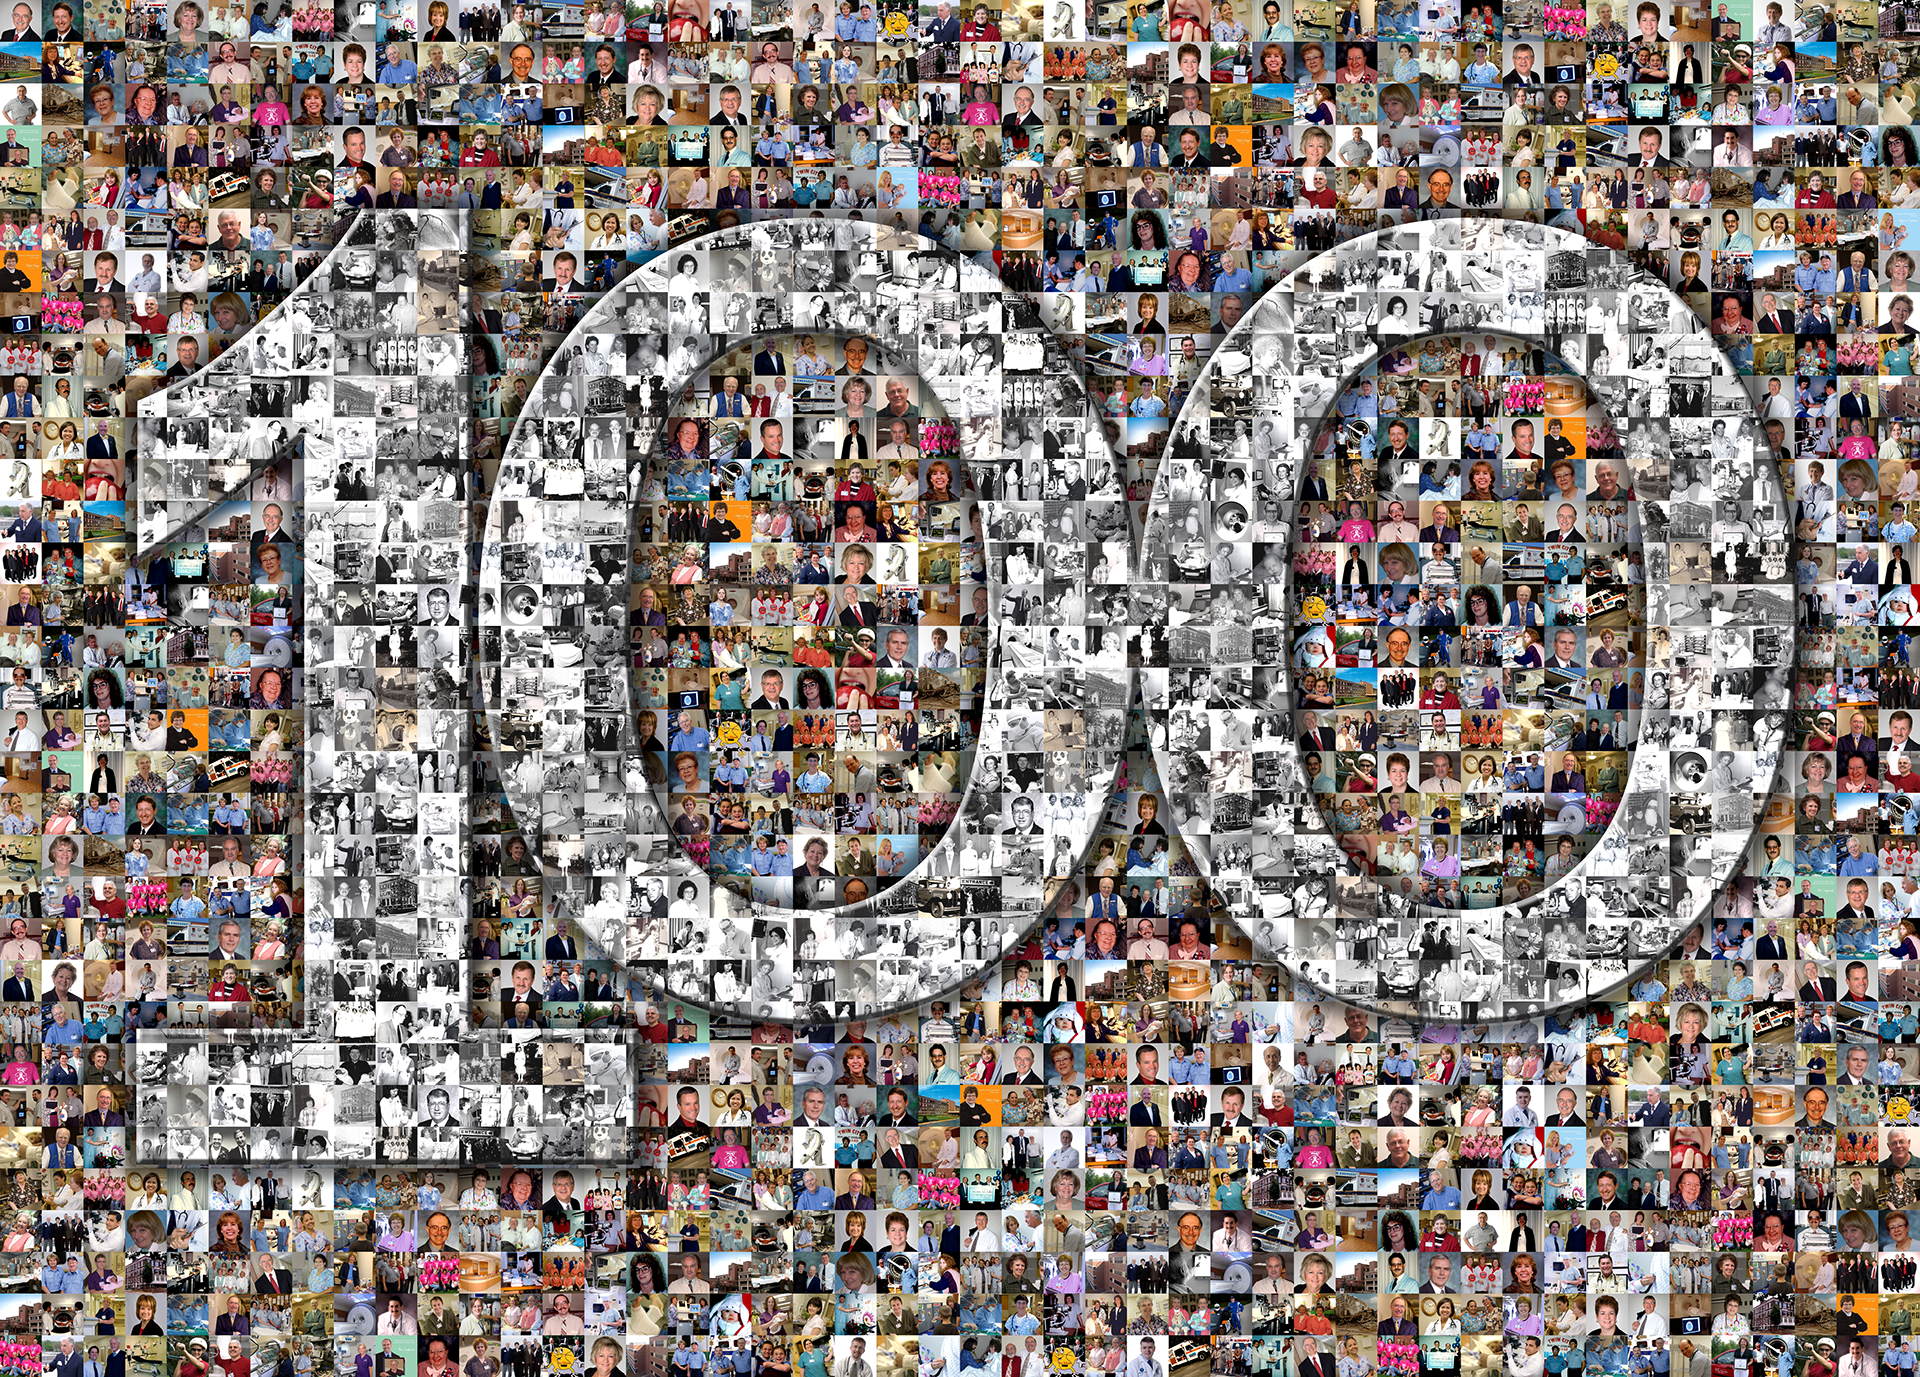 photo mosaic created using 279 corporate photos